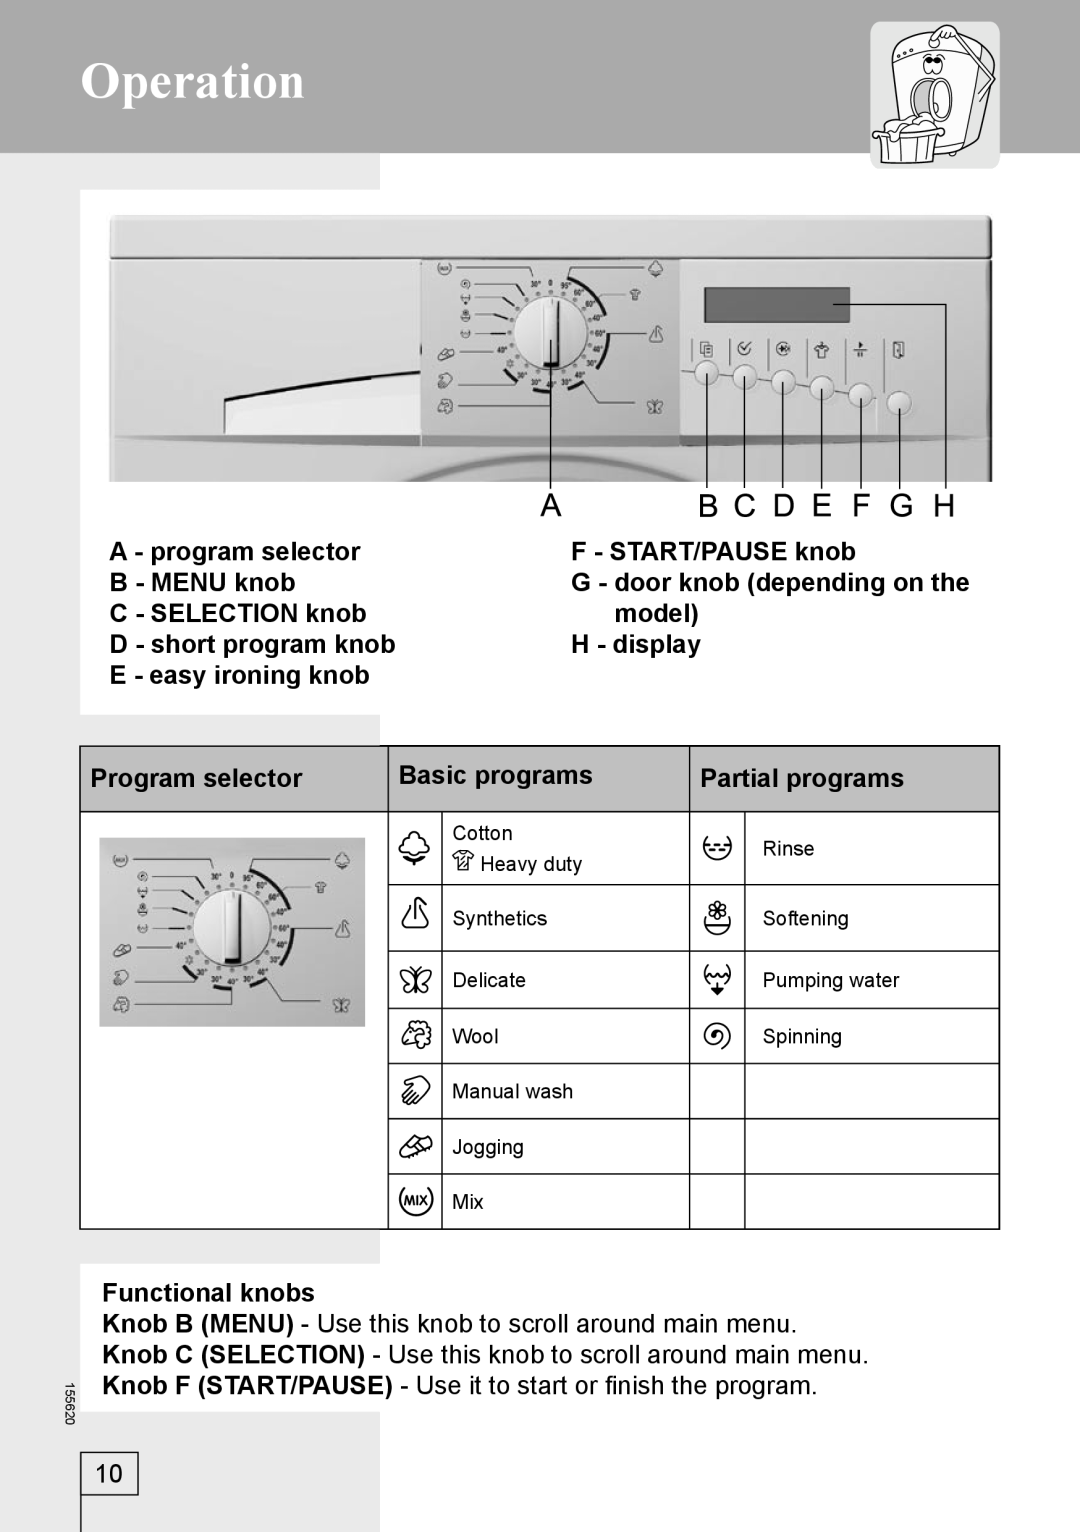 Smeg 155620 Operation, A - program selector, F - START/PAUSE knob, B - MENU knob, G - door knob depending on the, model 